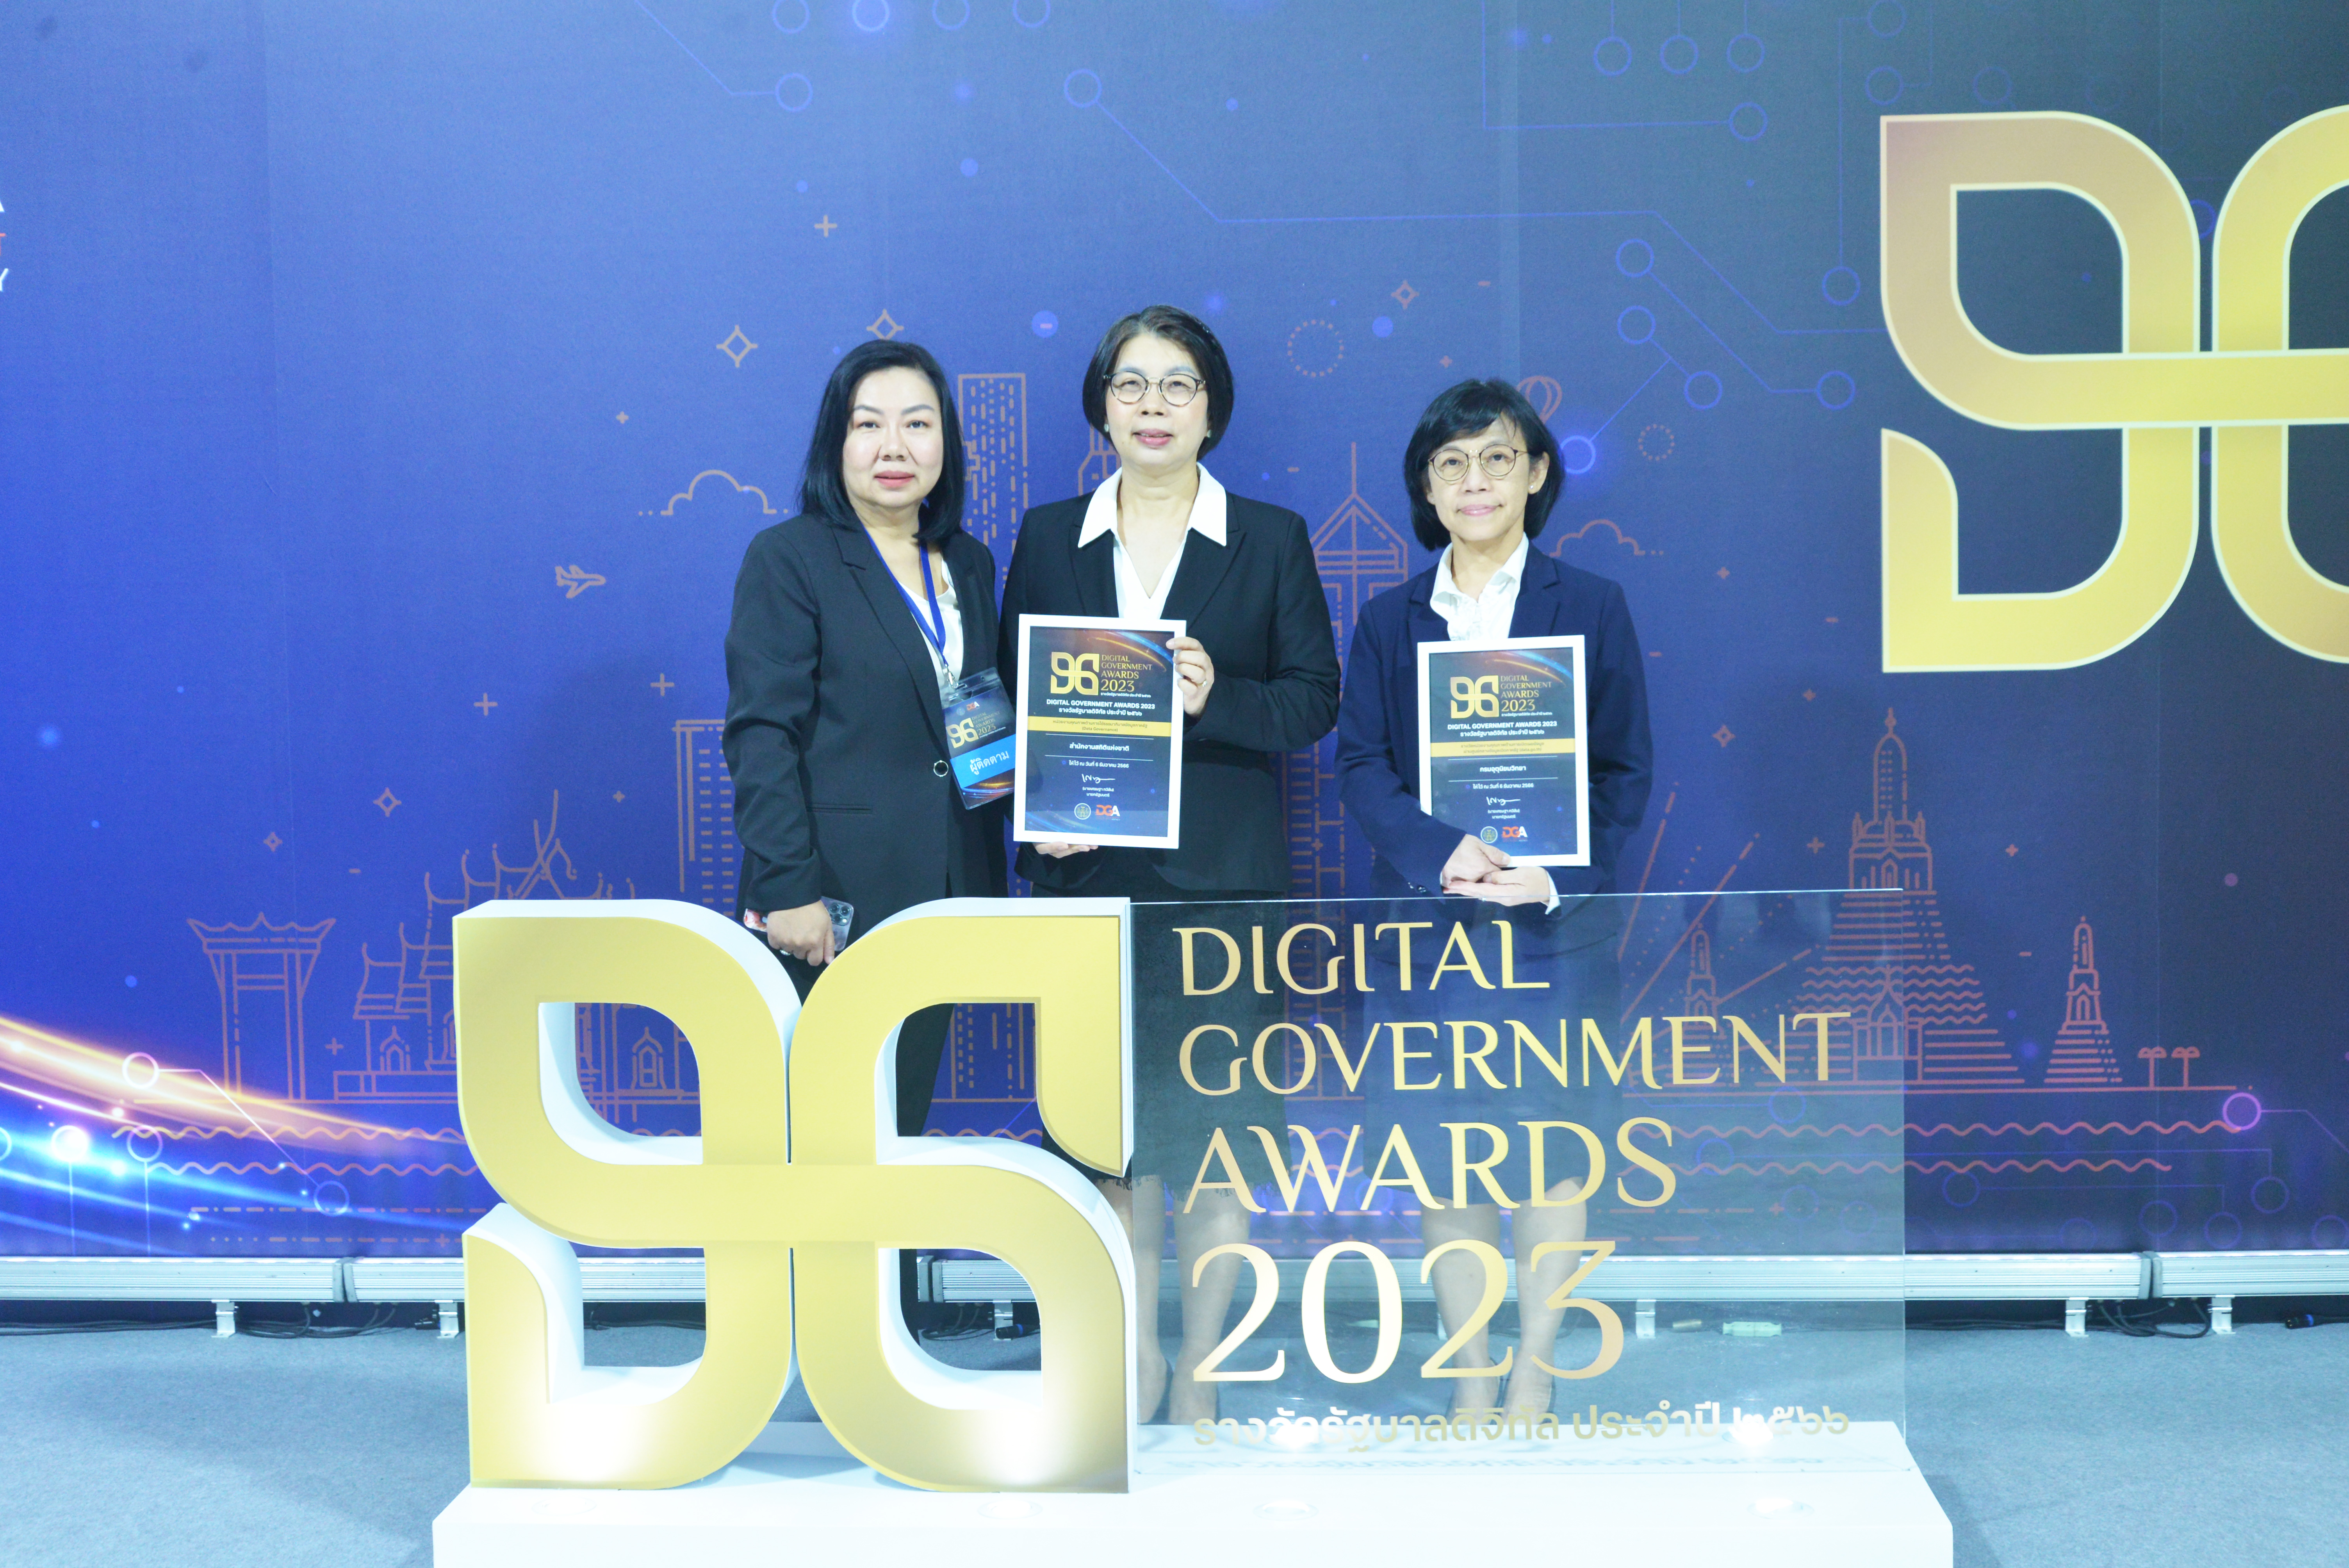 Digital Government Awards 2023